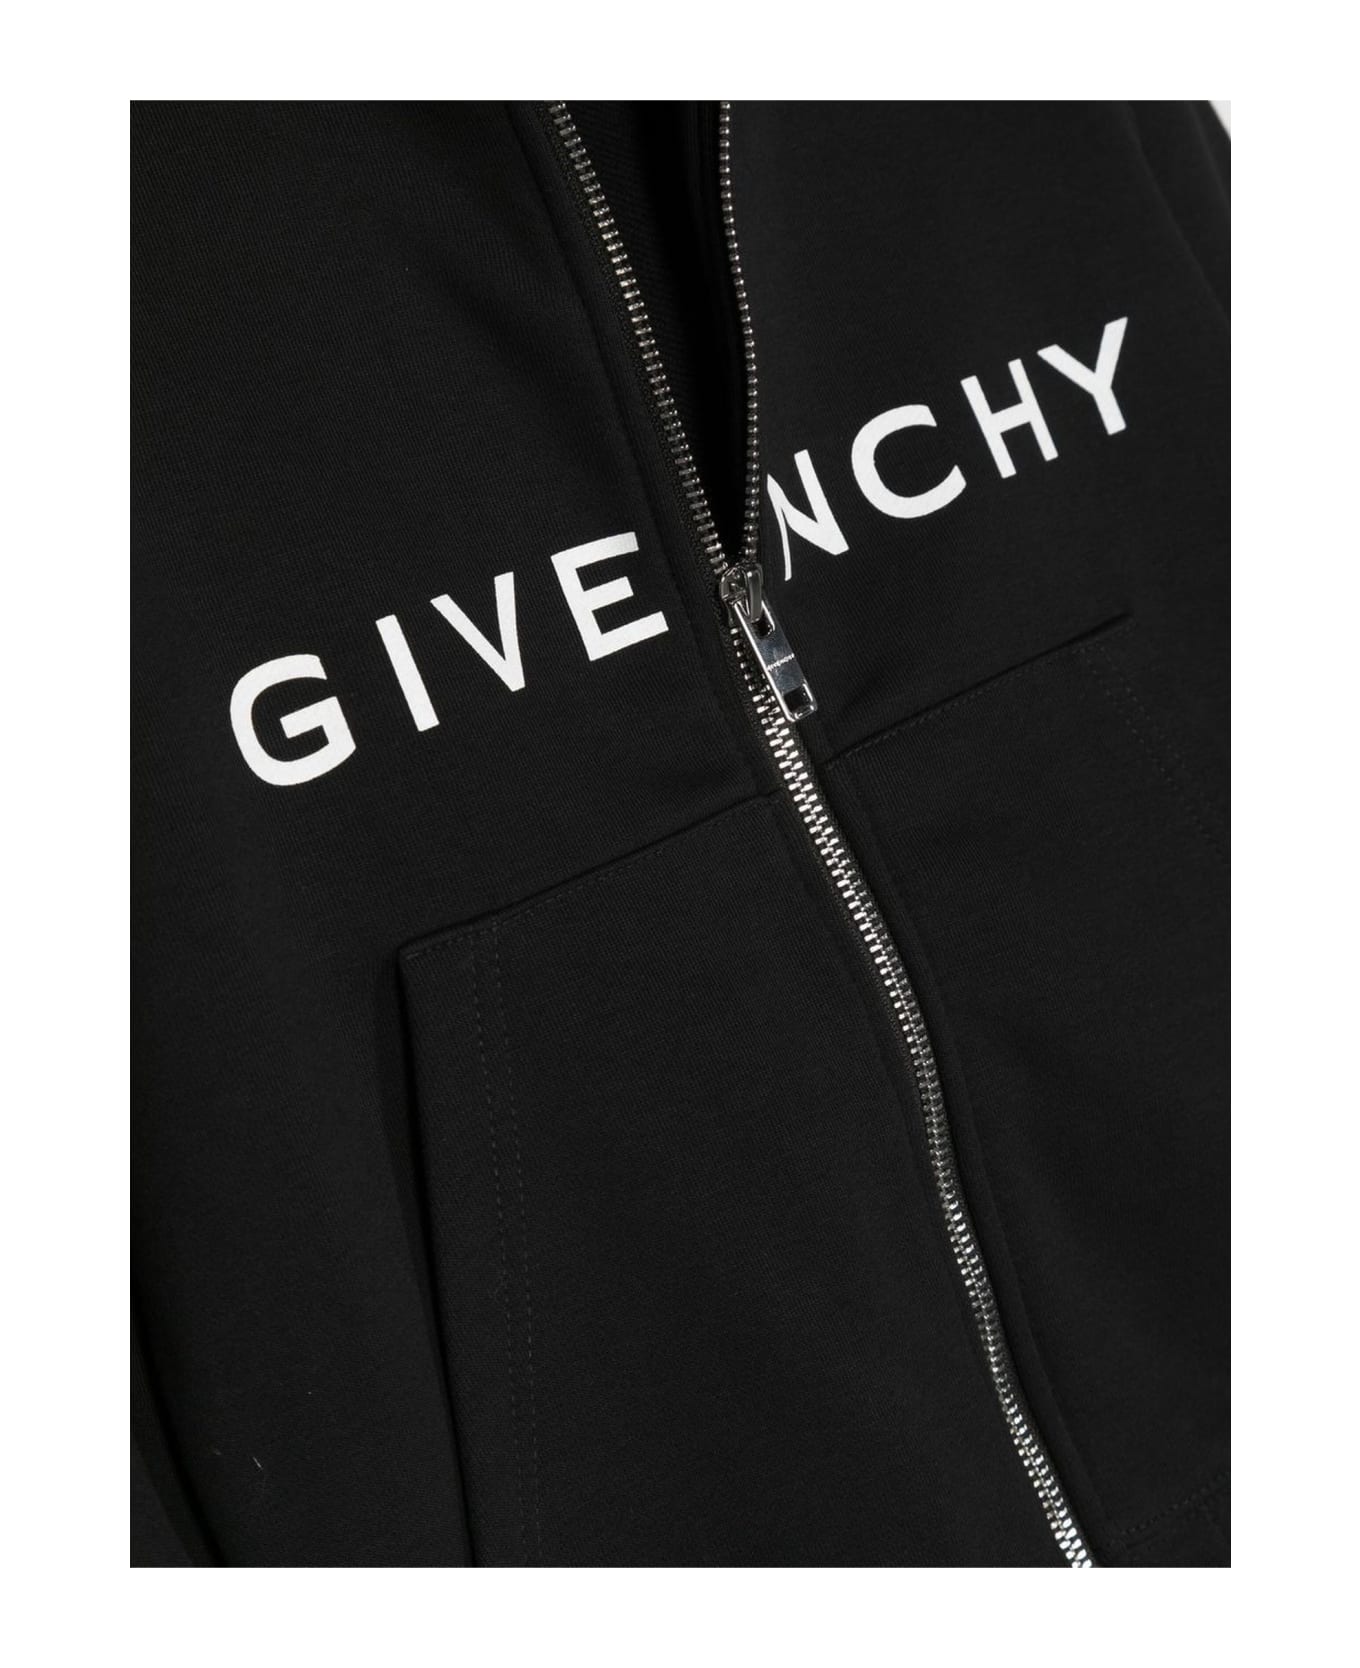 Givenchy Black Cotton Hoodie - Nero